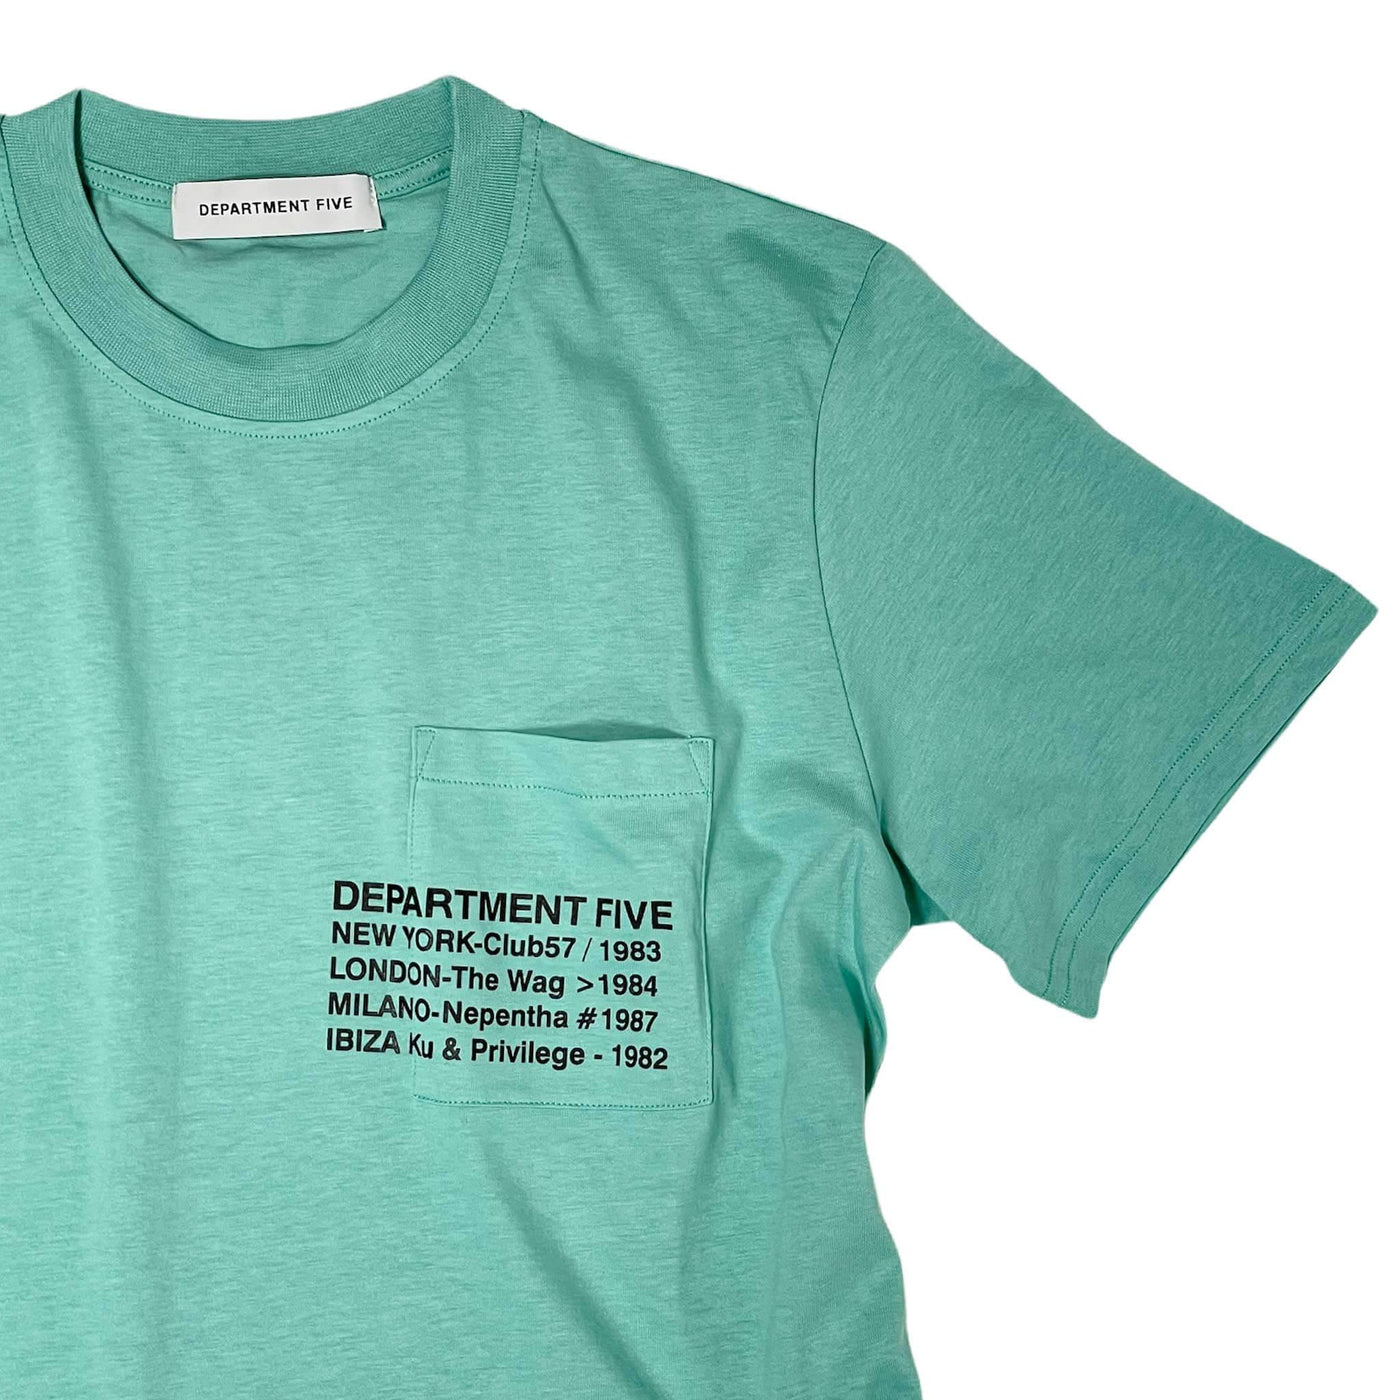 Department Five t Shirt mc, Ut009.1jf0007, Girocollo, 727 Verde Acqua, Bassiniboutique.it, 2022 p/e